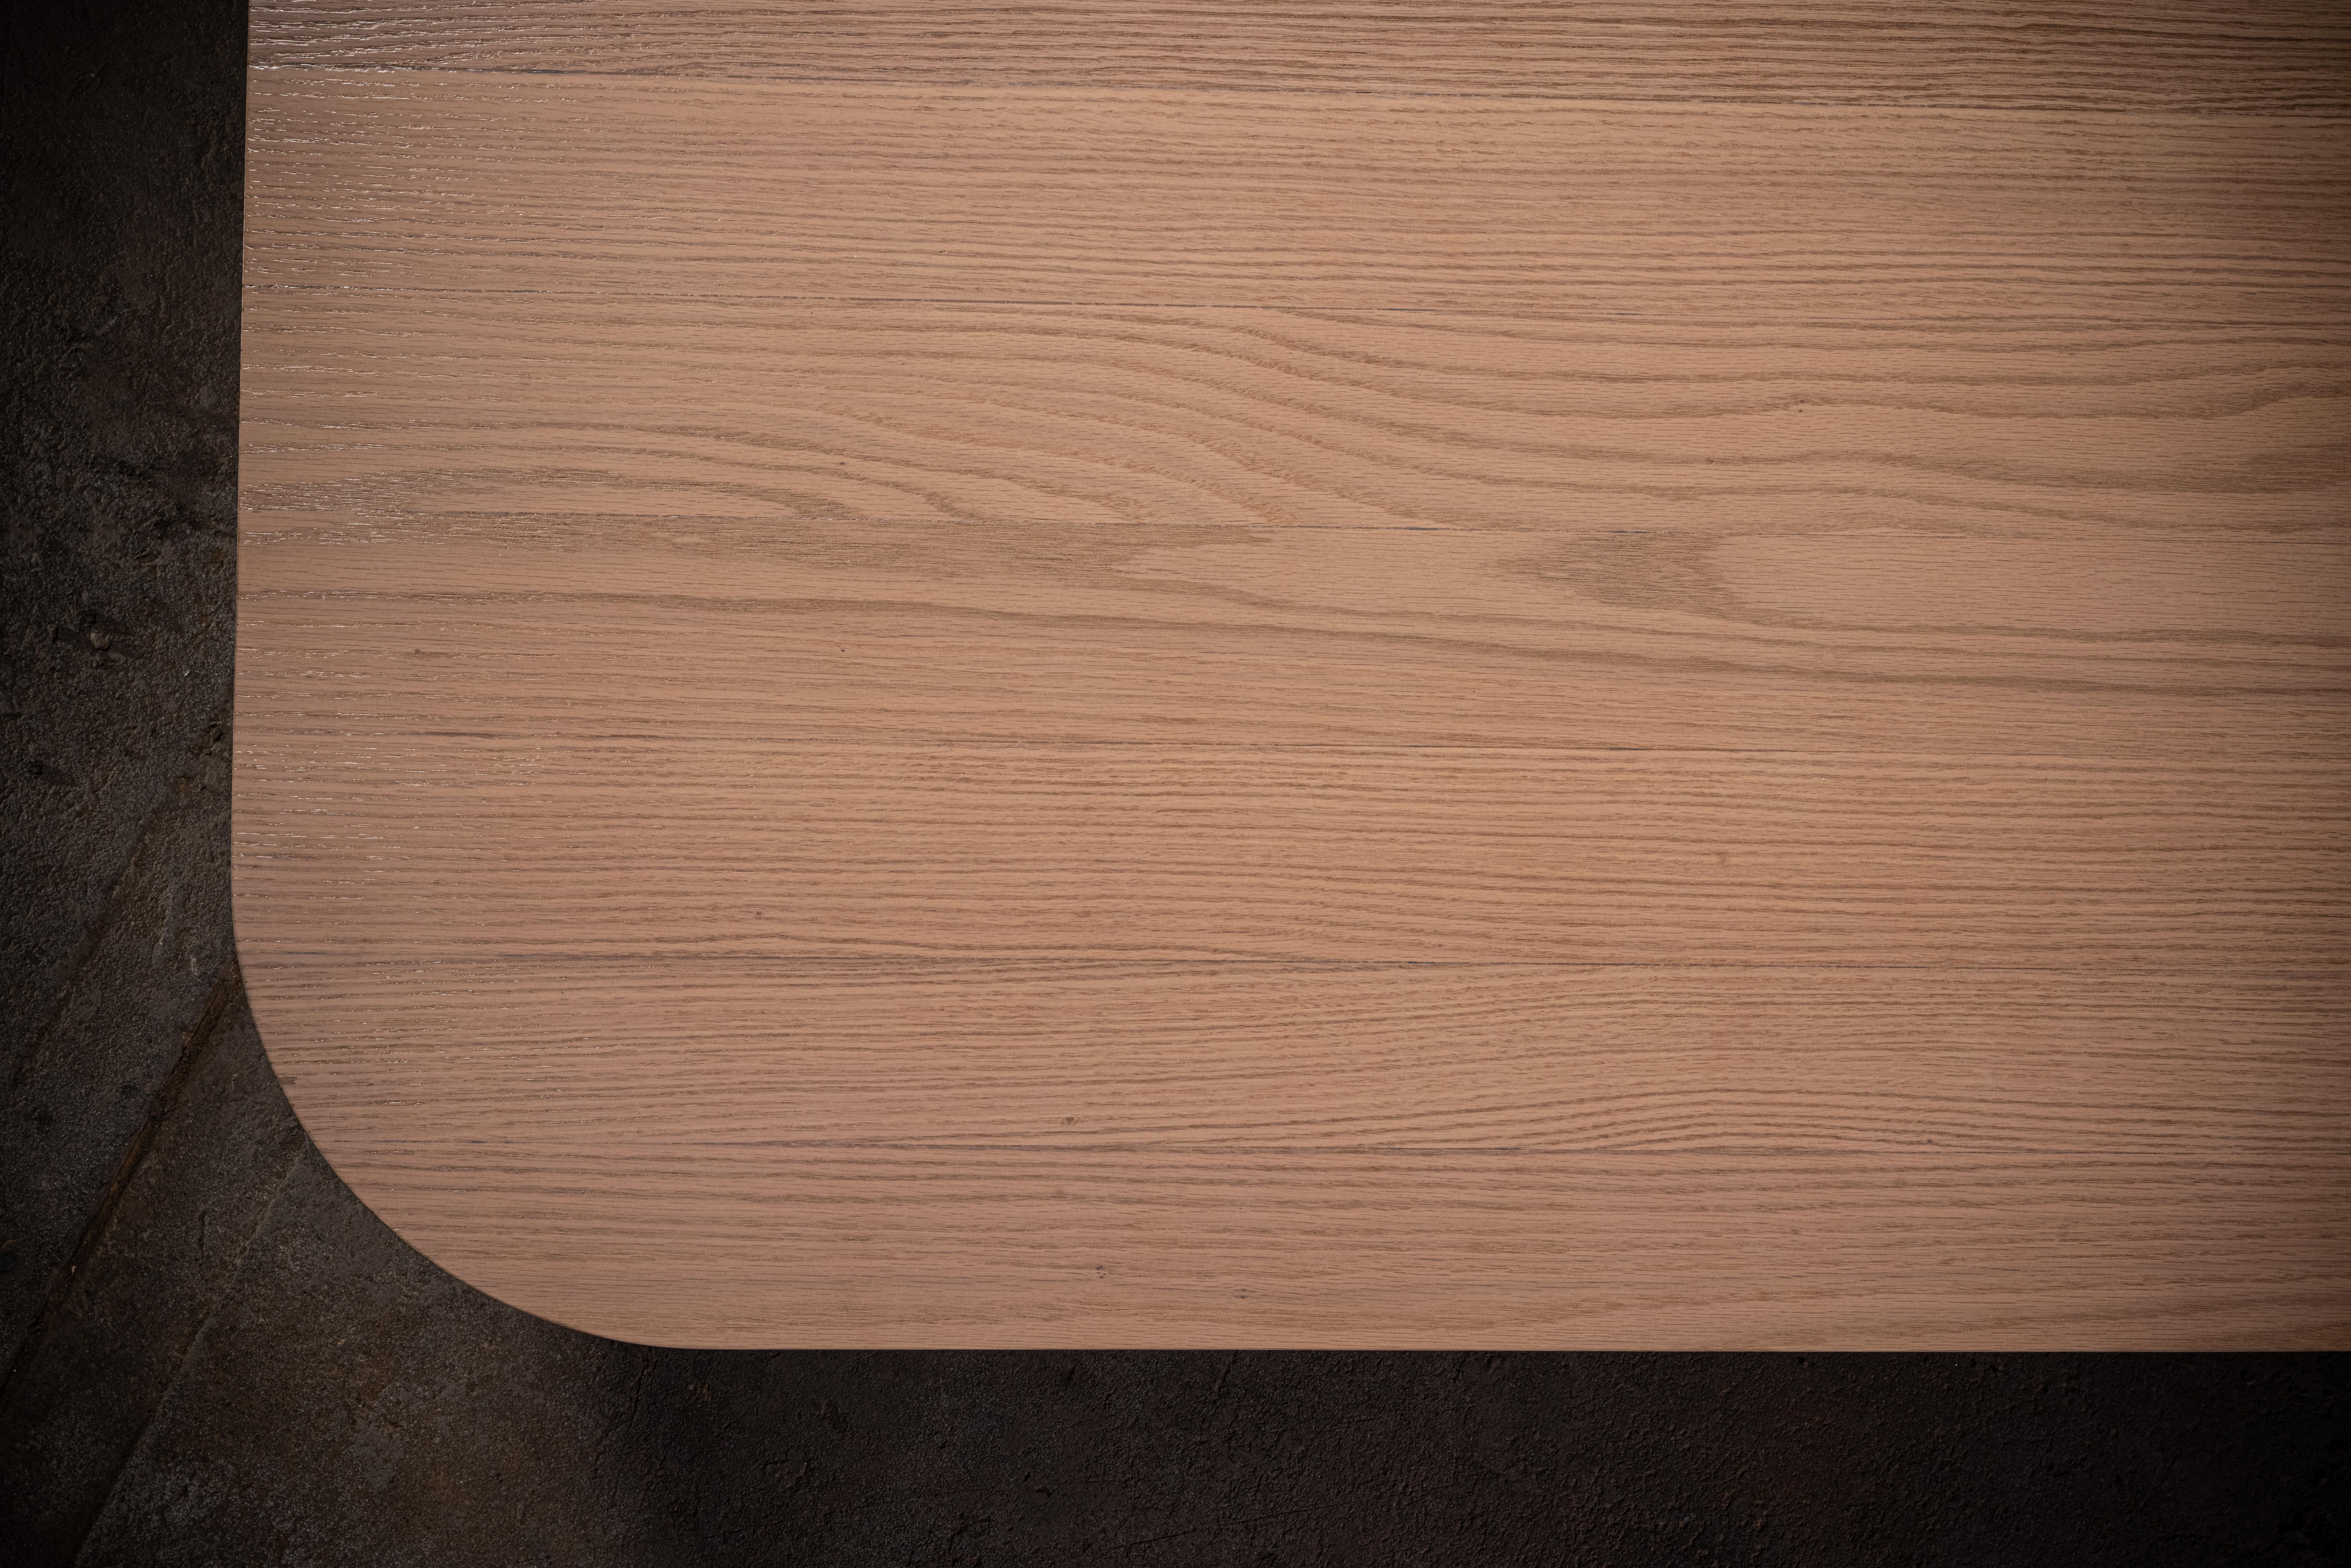 Solid natural oak rectangular coffee table
Measures: 3